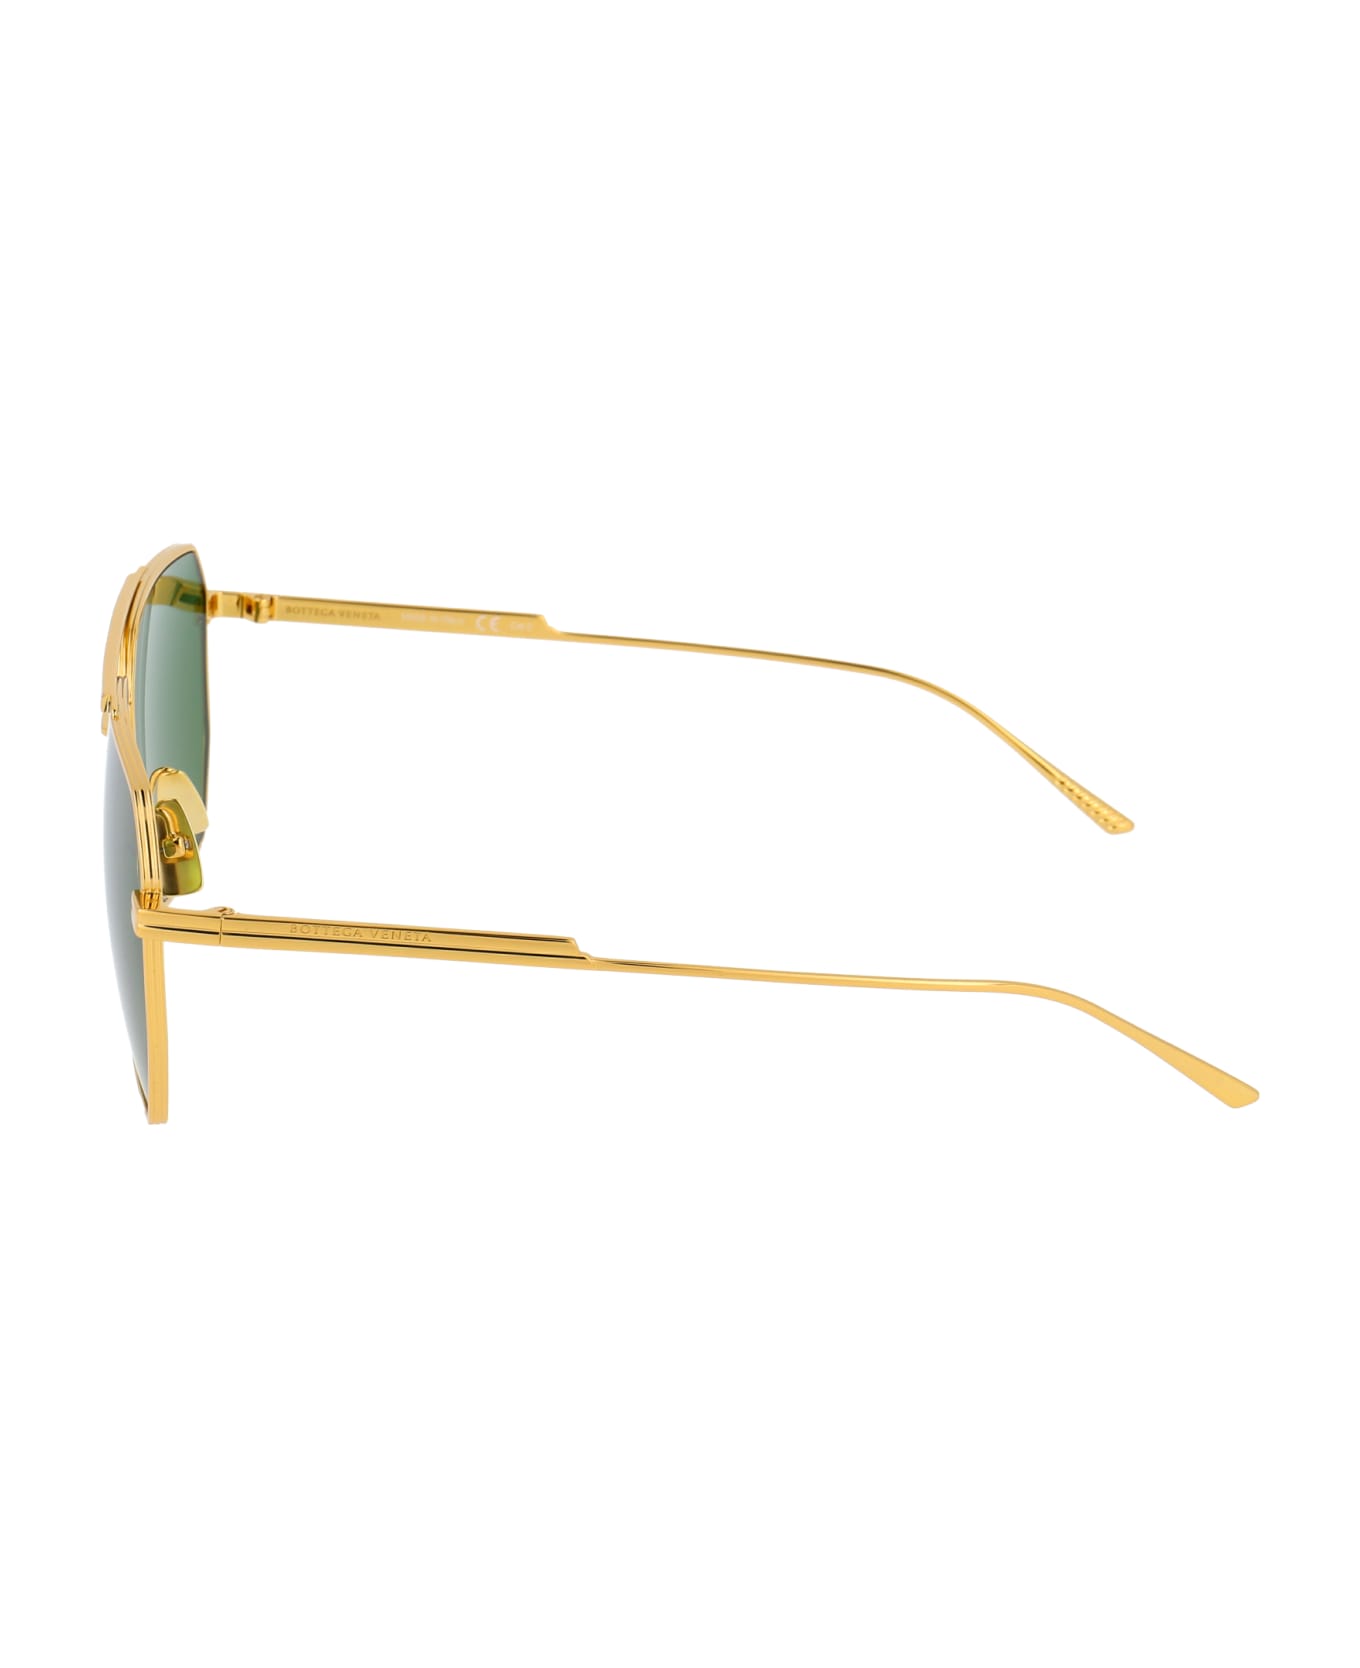 Bottega Veneta Eyewear Bv1012s Sunglasses - 004 GOLD GOLD GREEN